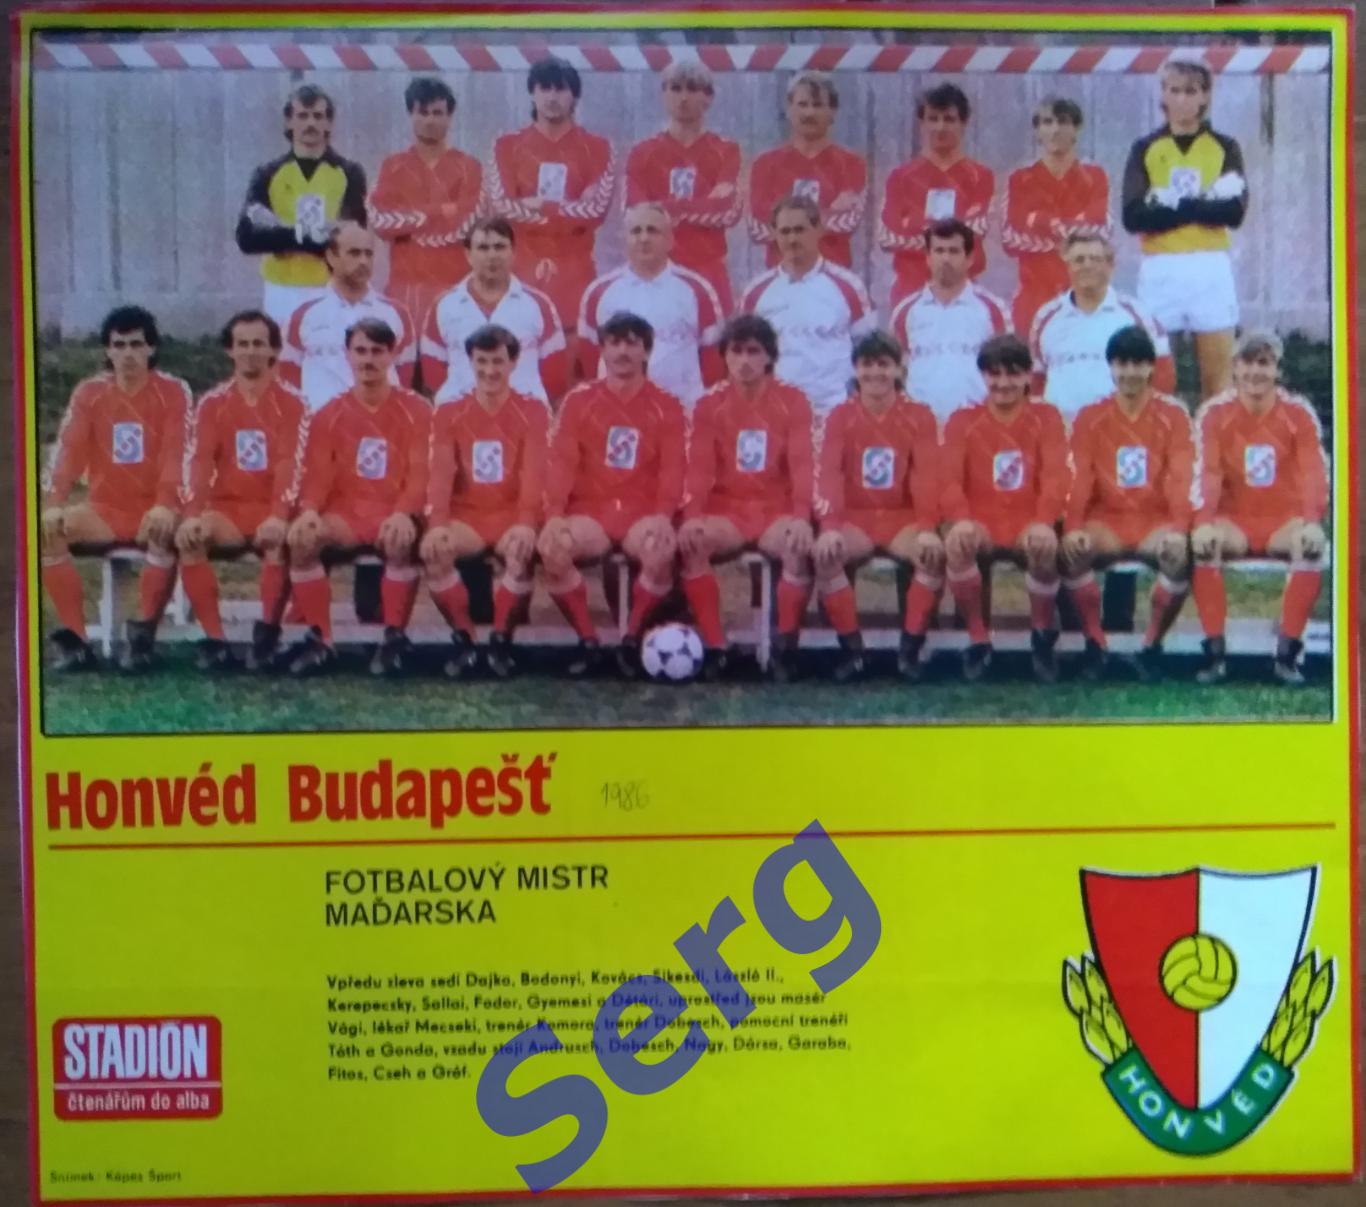 Постер Гонвед Будапешт, Венгрия из журнала Стадион/Stadion 1986 год